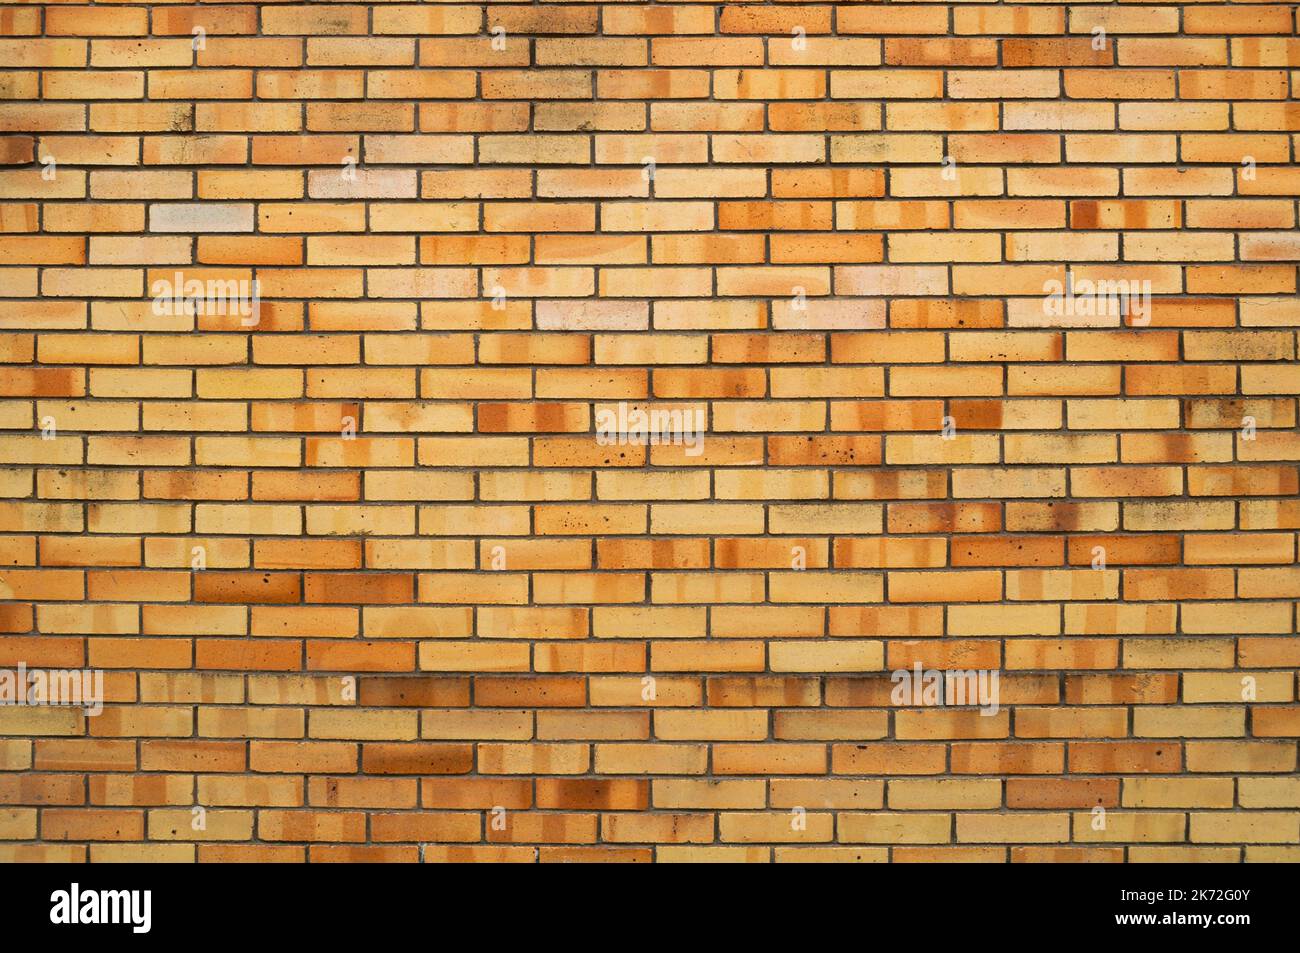 Brick wall background, new yellow bricks wall pattern. Texture brick wall of yellow color Stock Photo